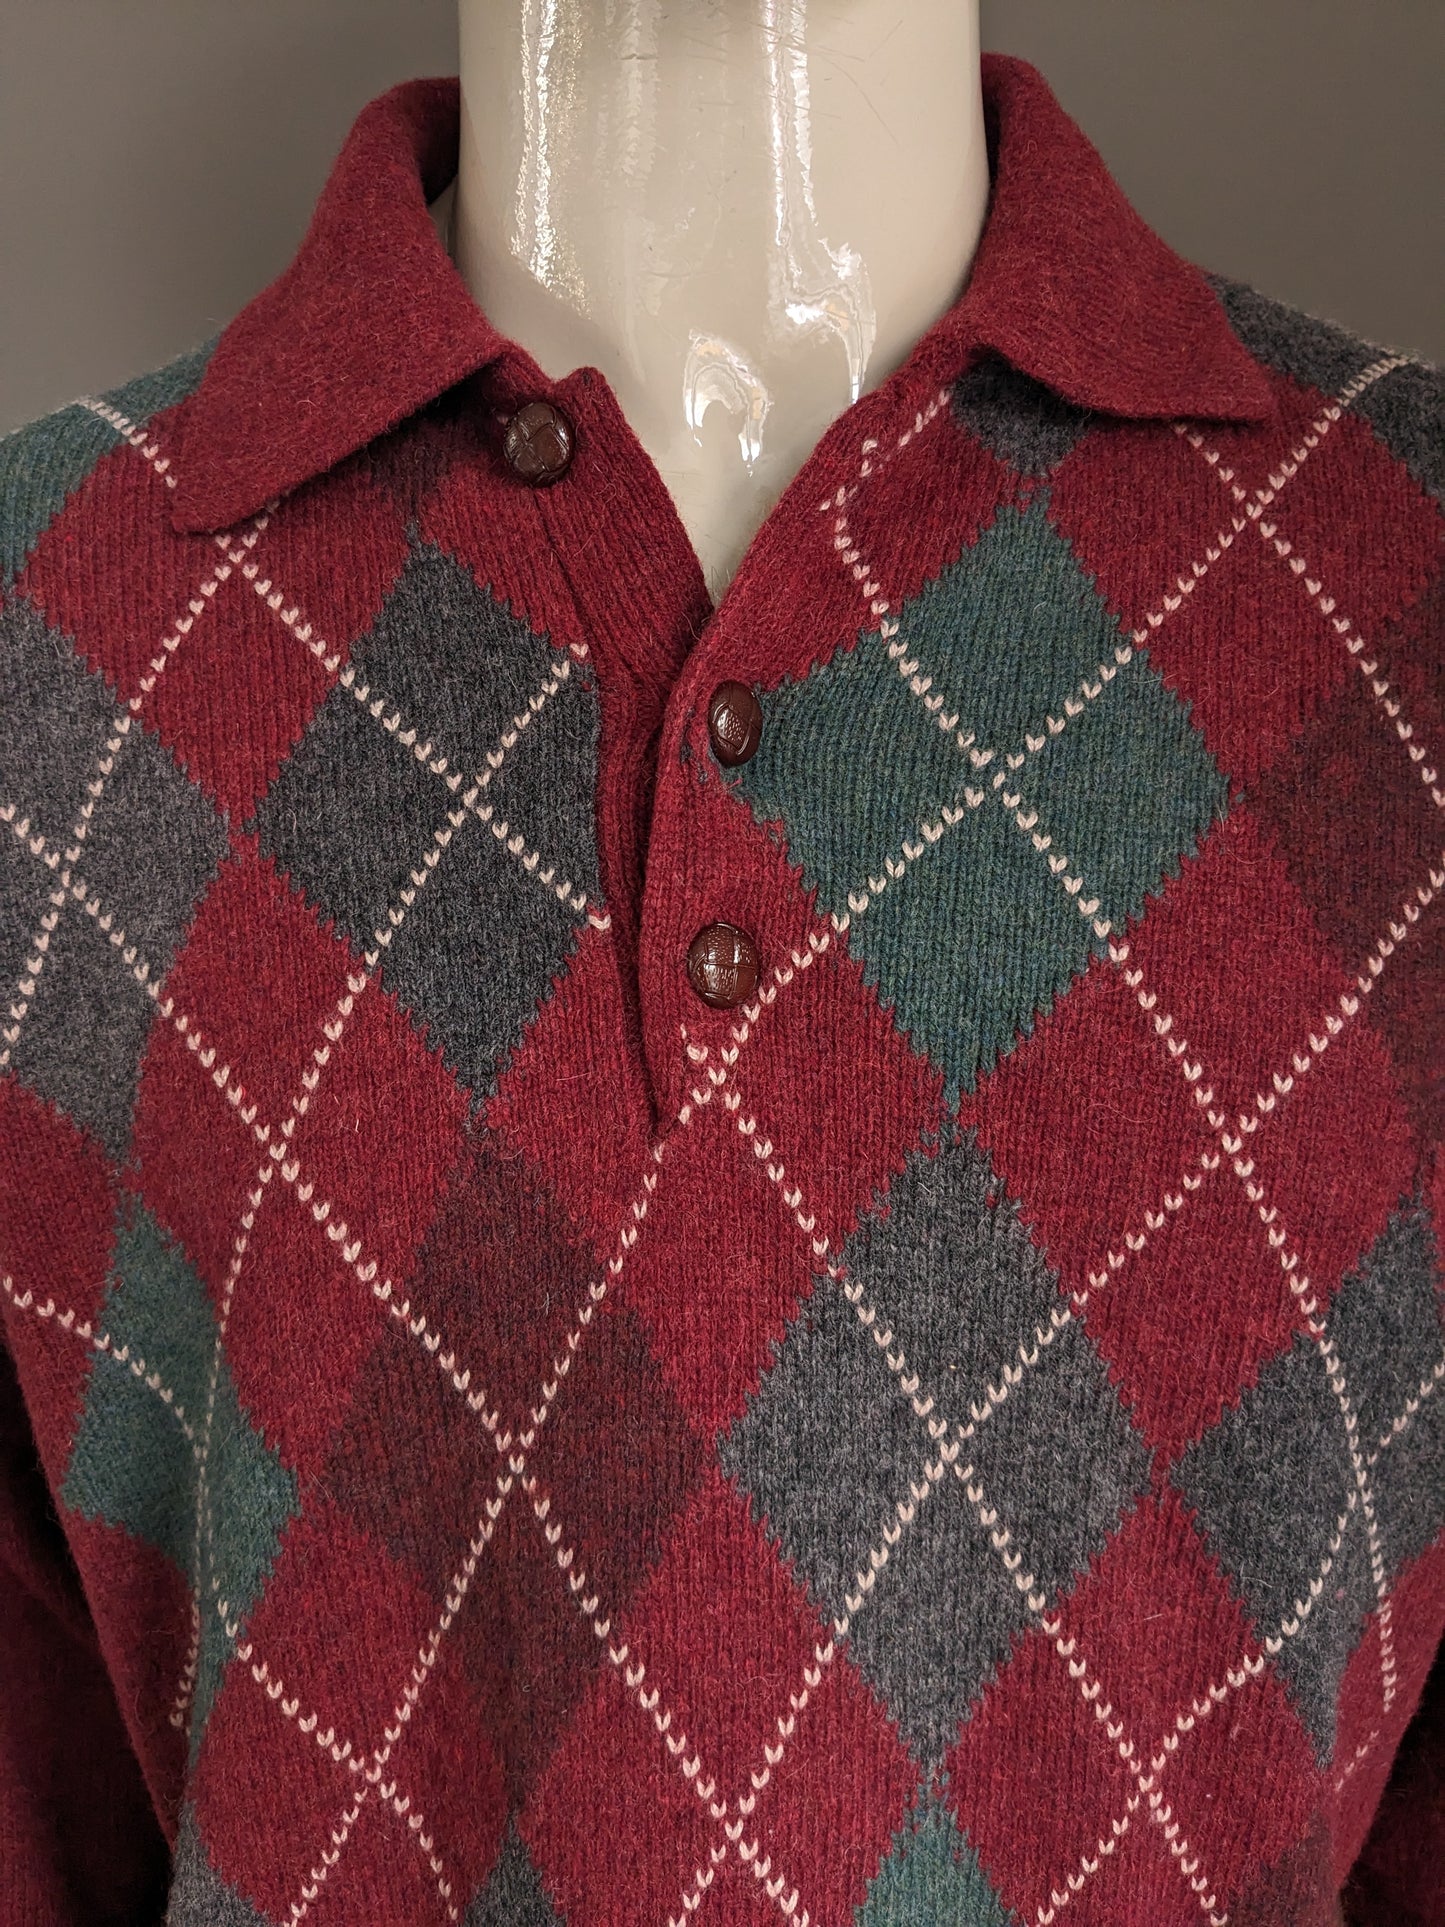 Vintage Van Vaan Shetland wollen Polo trui. Bordeaux Argyle motief. Maat XL.